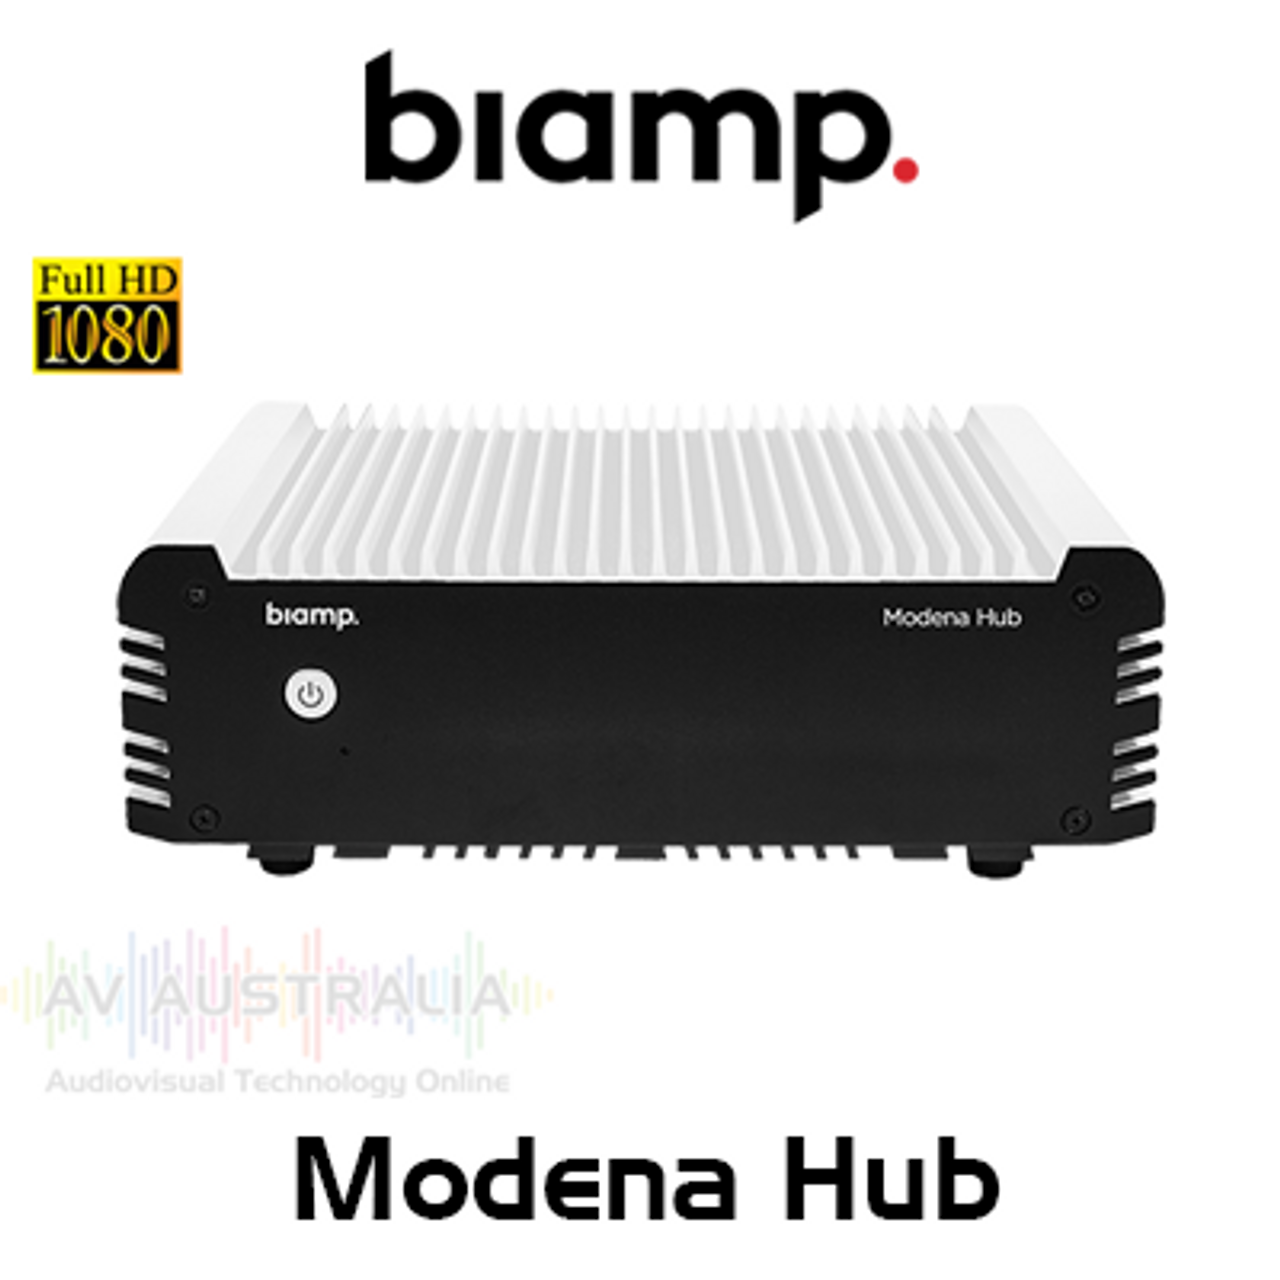 Biamp Modena Hub Wireless Presentation System